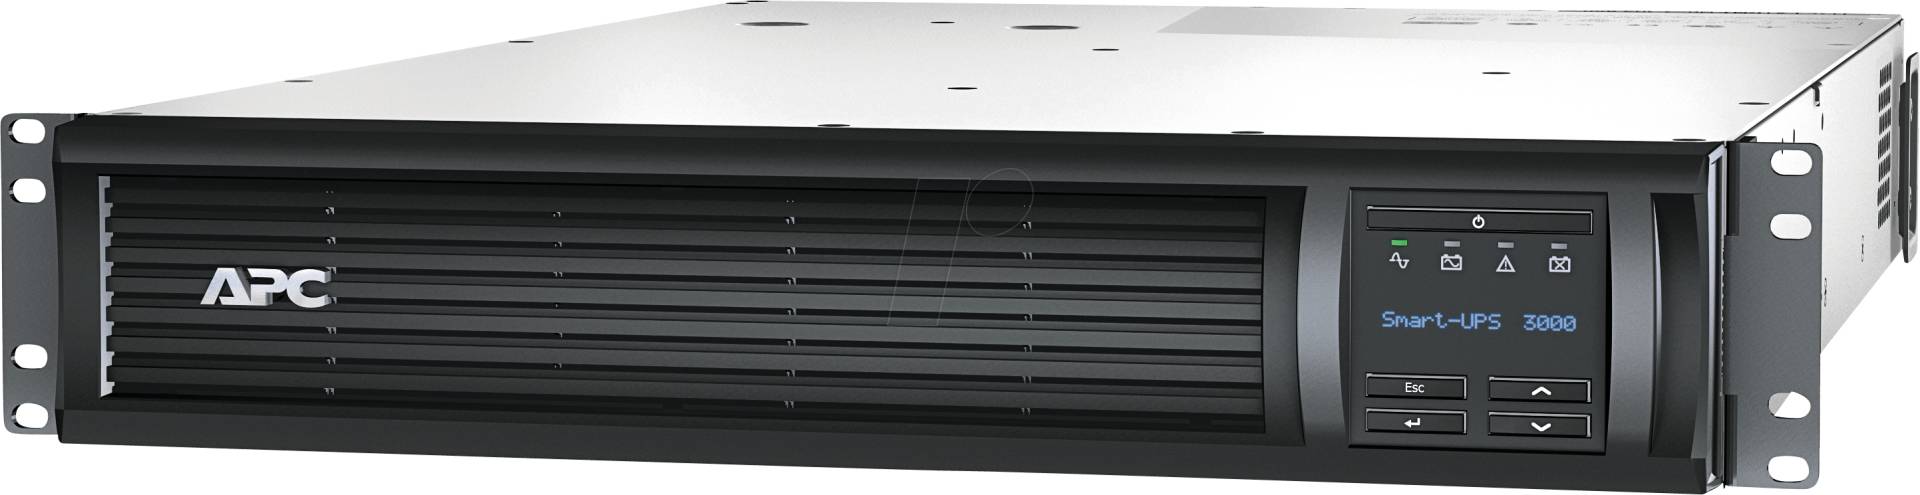 APCSMT3000RMI2UC - Smart-UPS, 3000VA, LCD RM 2U, 230V von APC